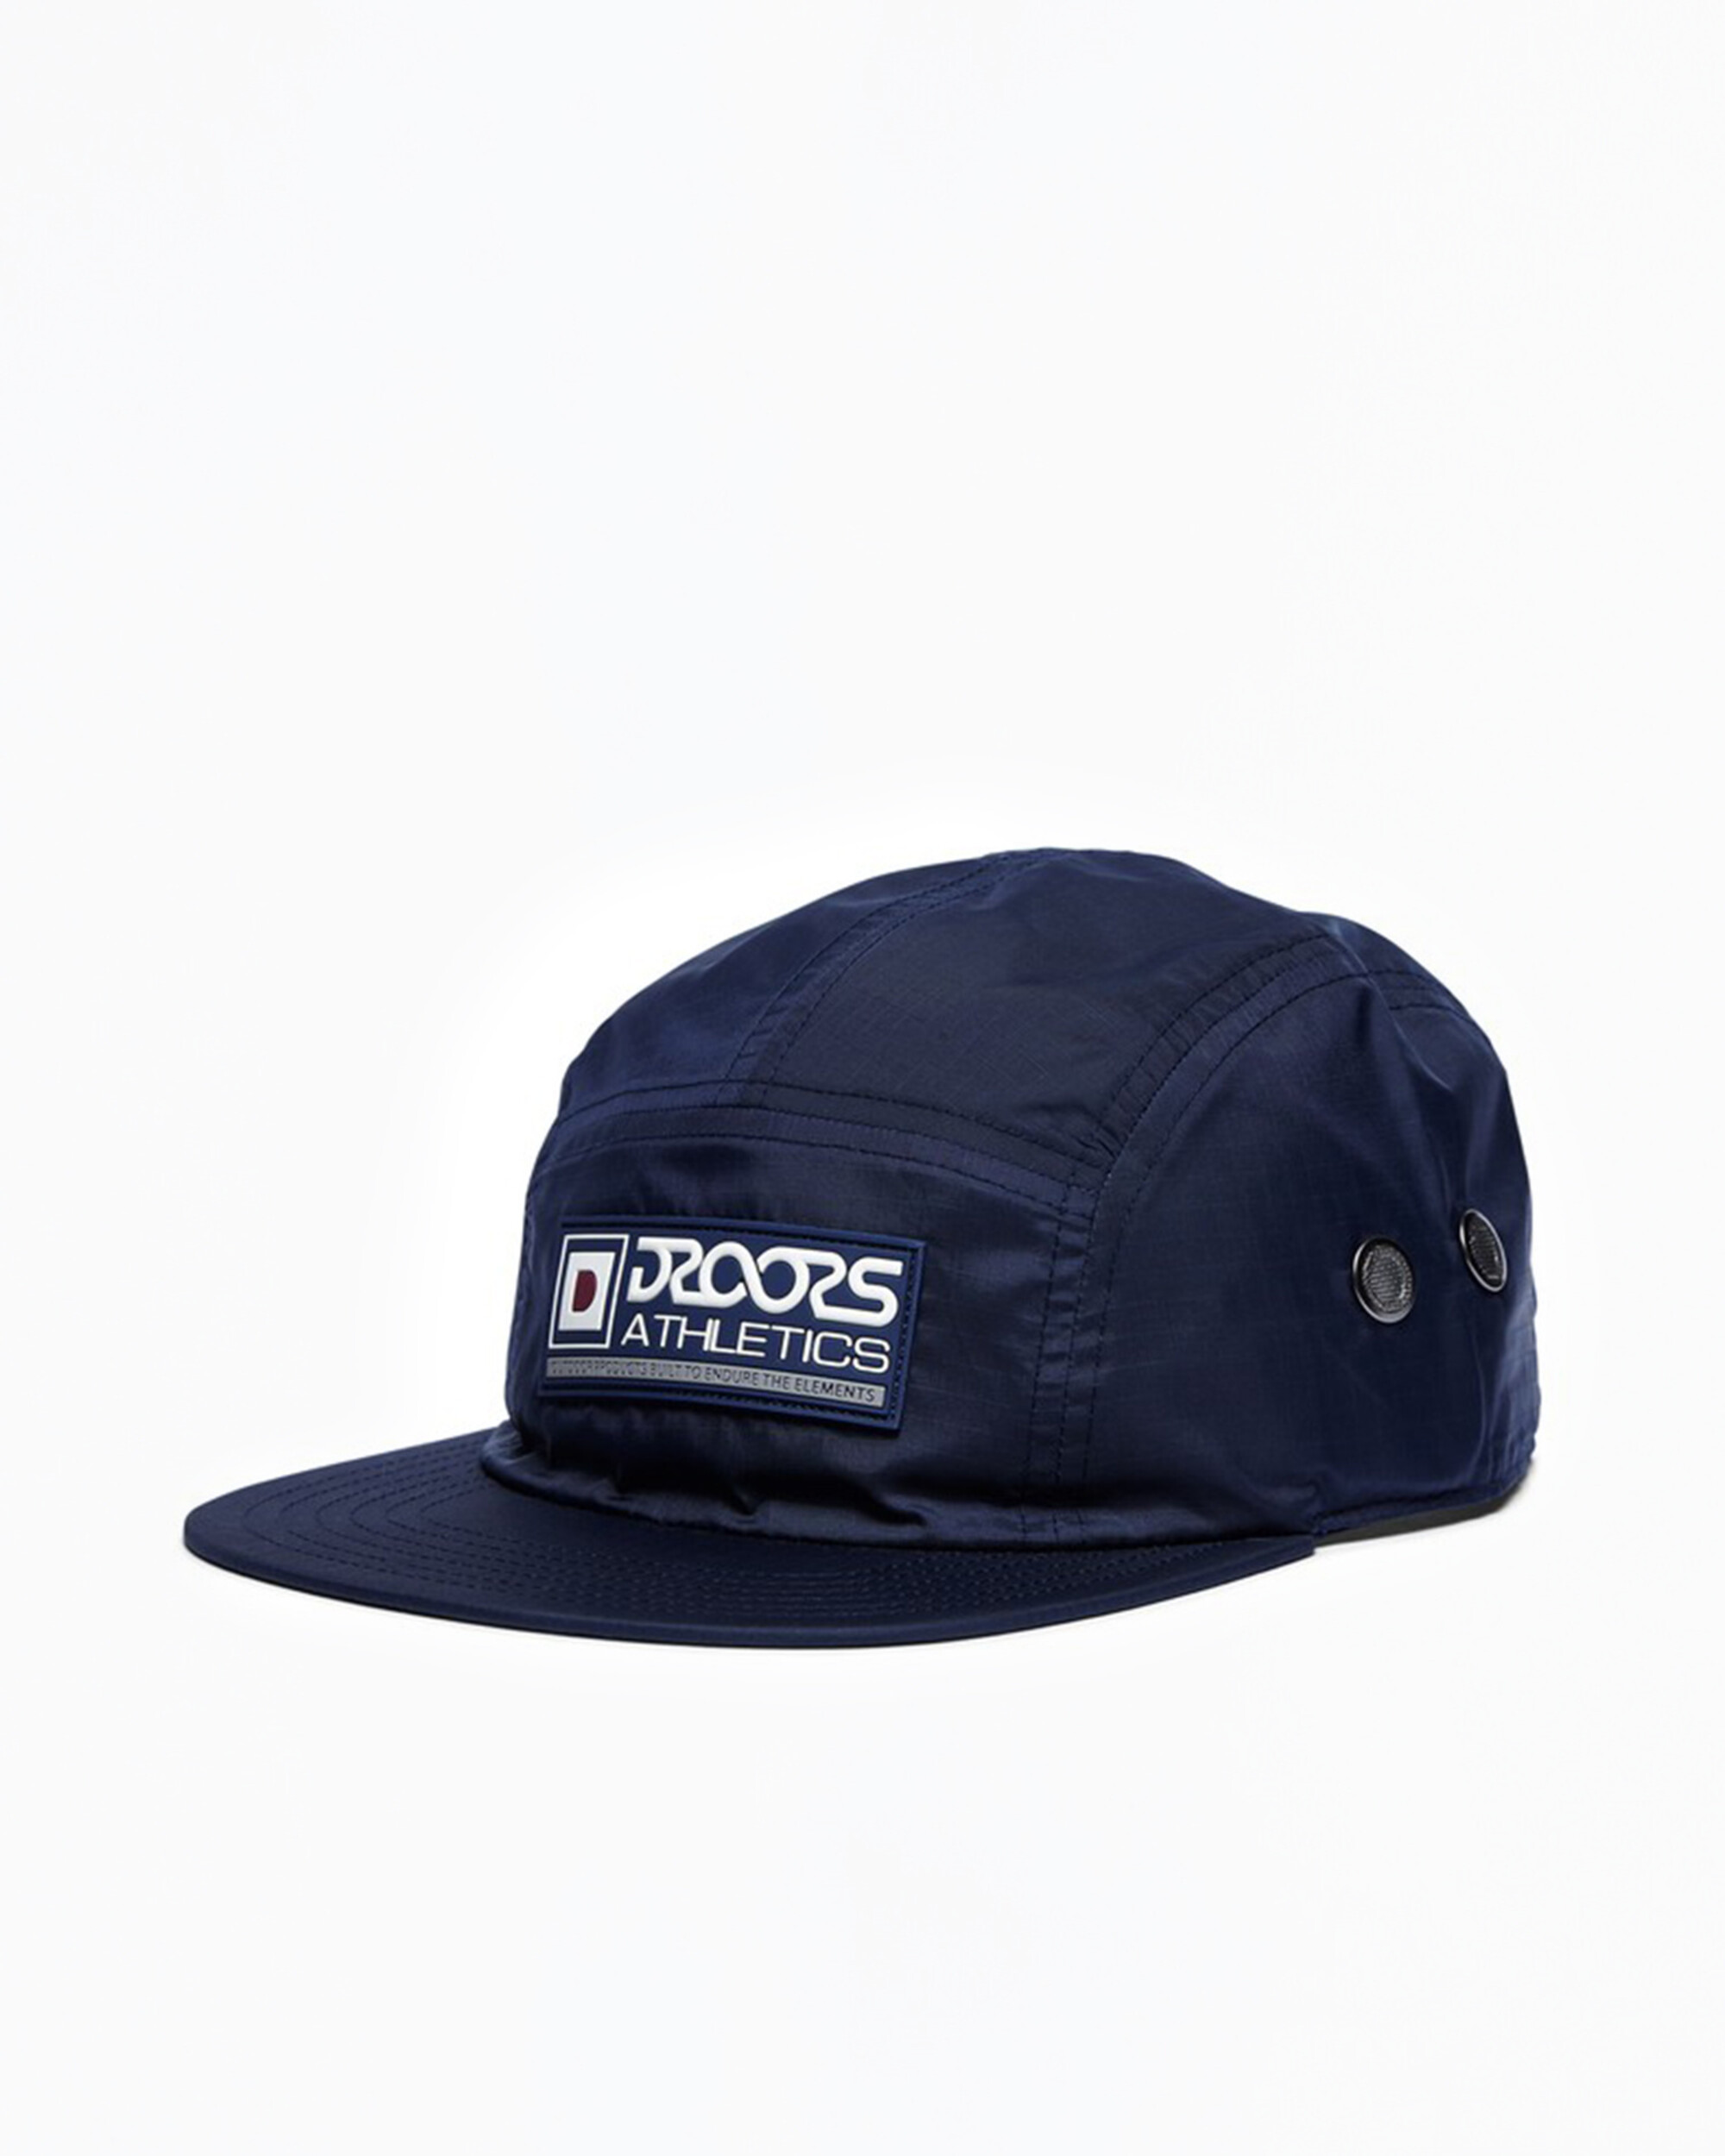 DROORS Infinity Camp Hat Navy